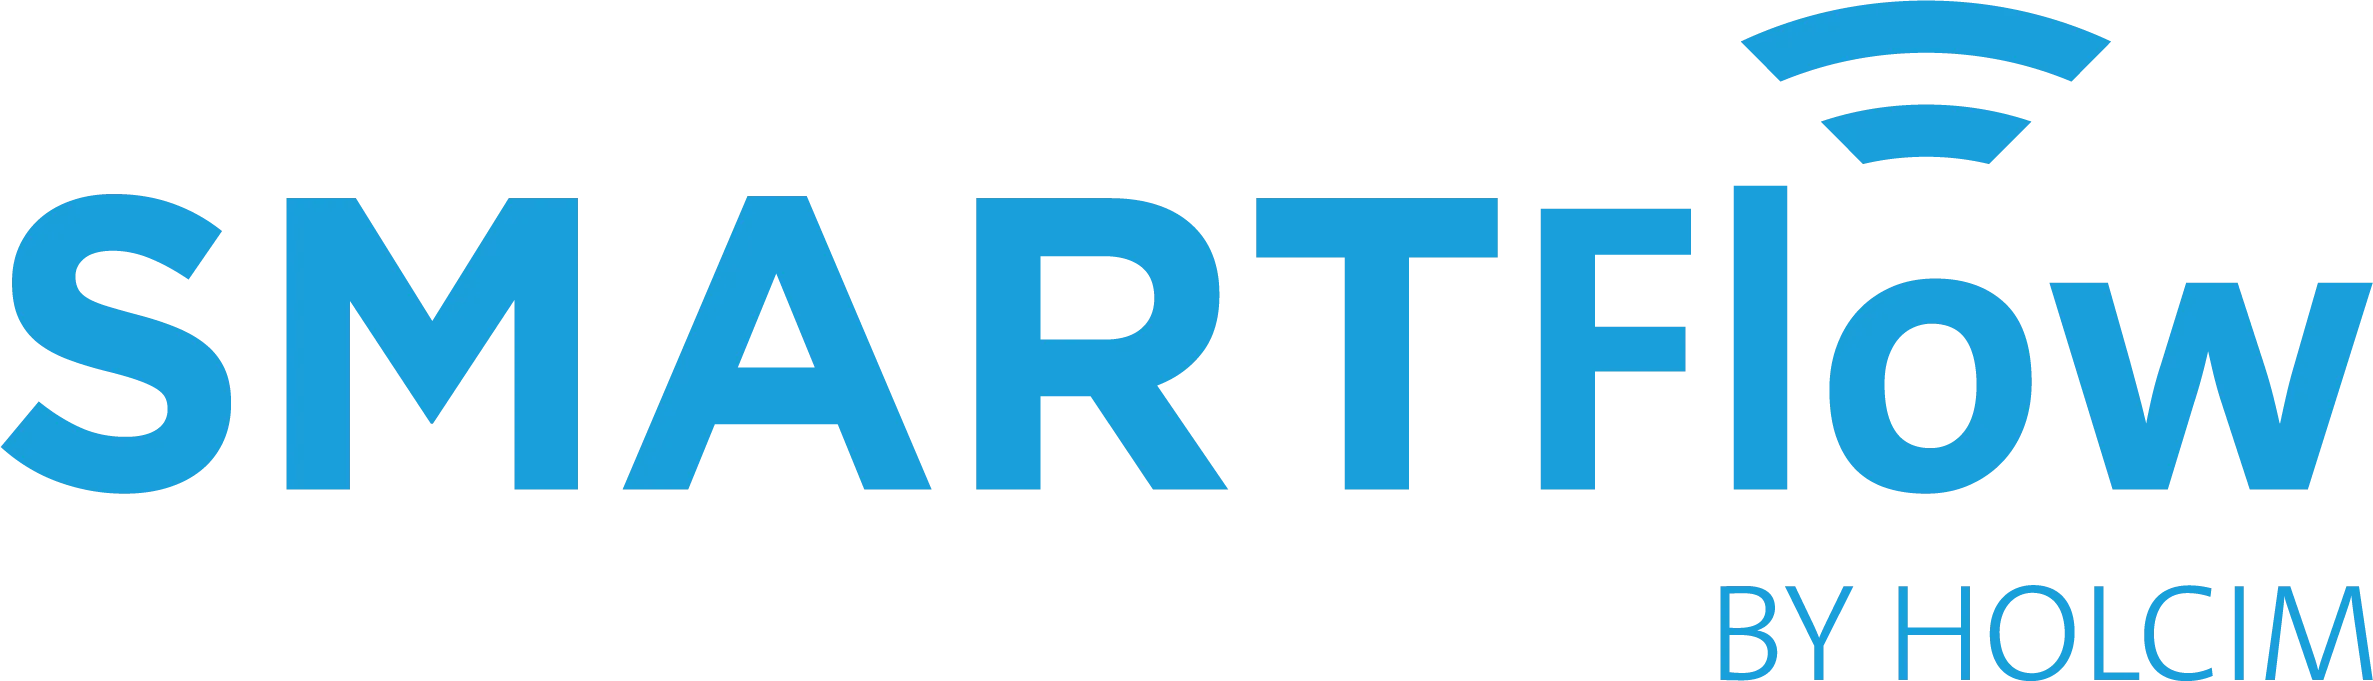 smartflow_logo.png